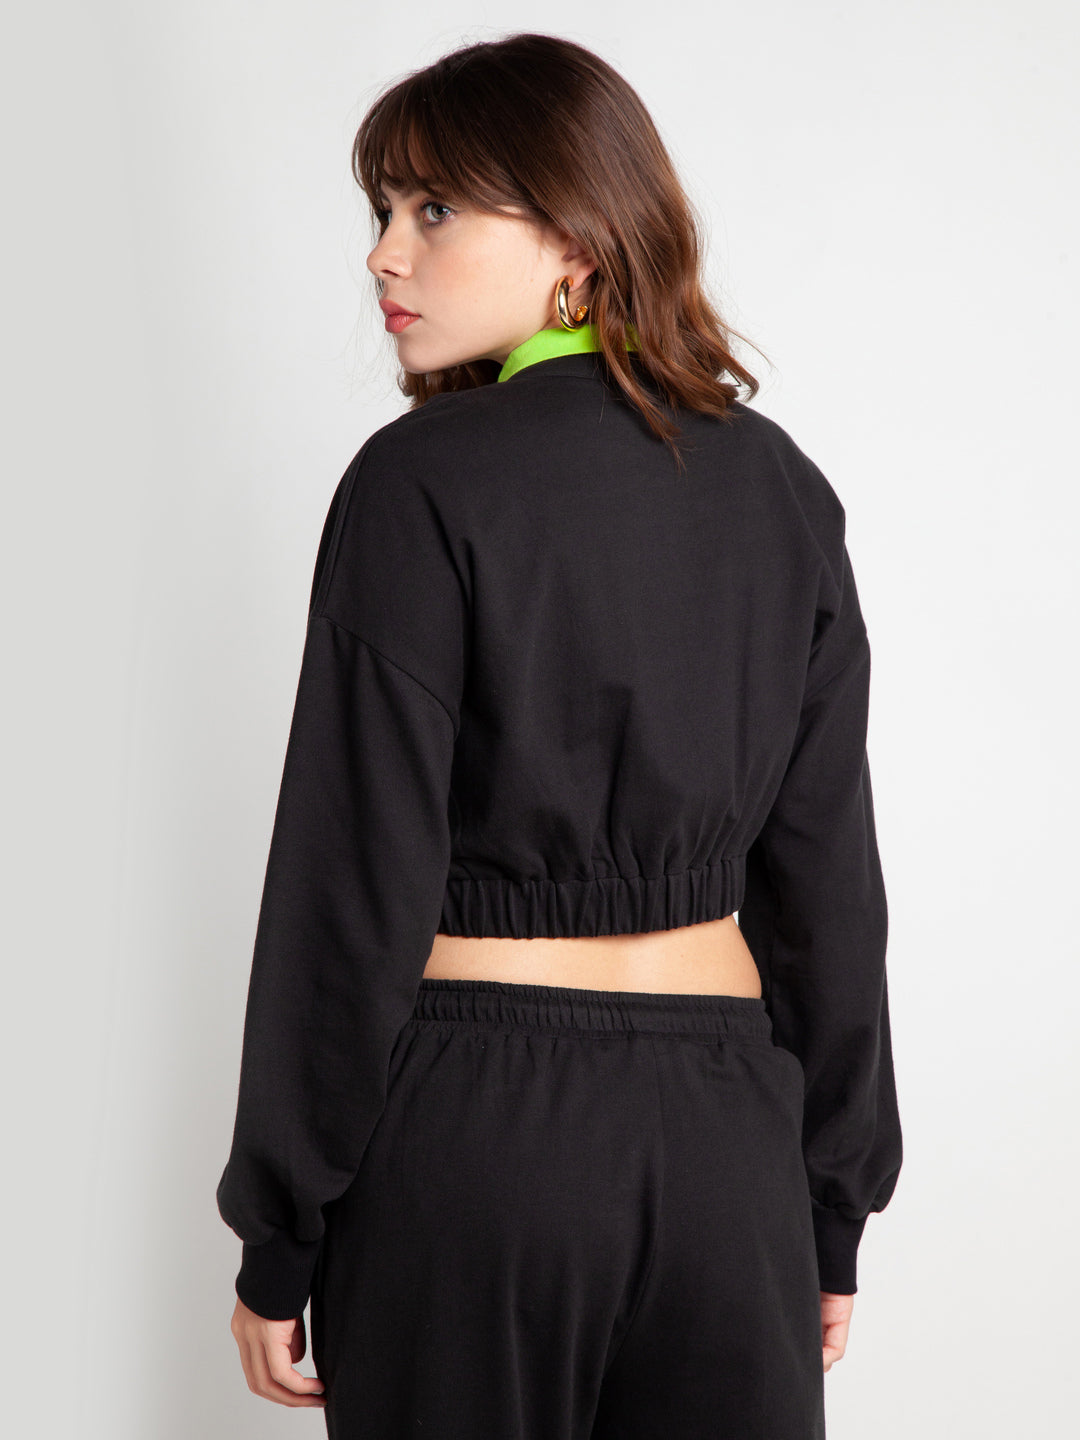 Black Printed Elasticated Jacket For Women